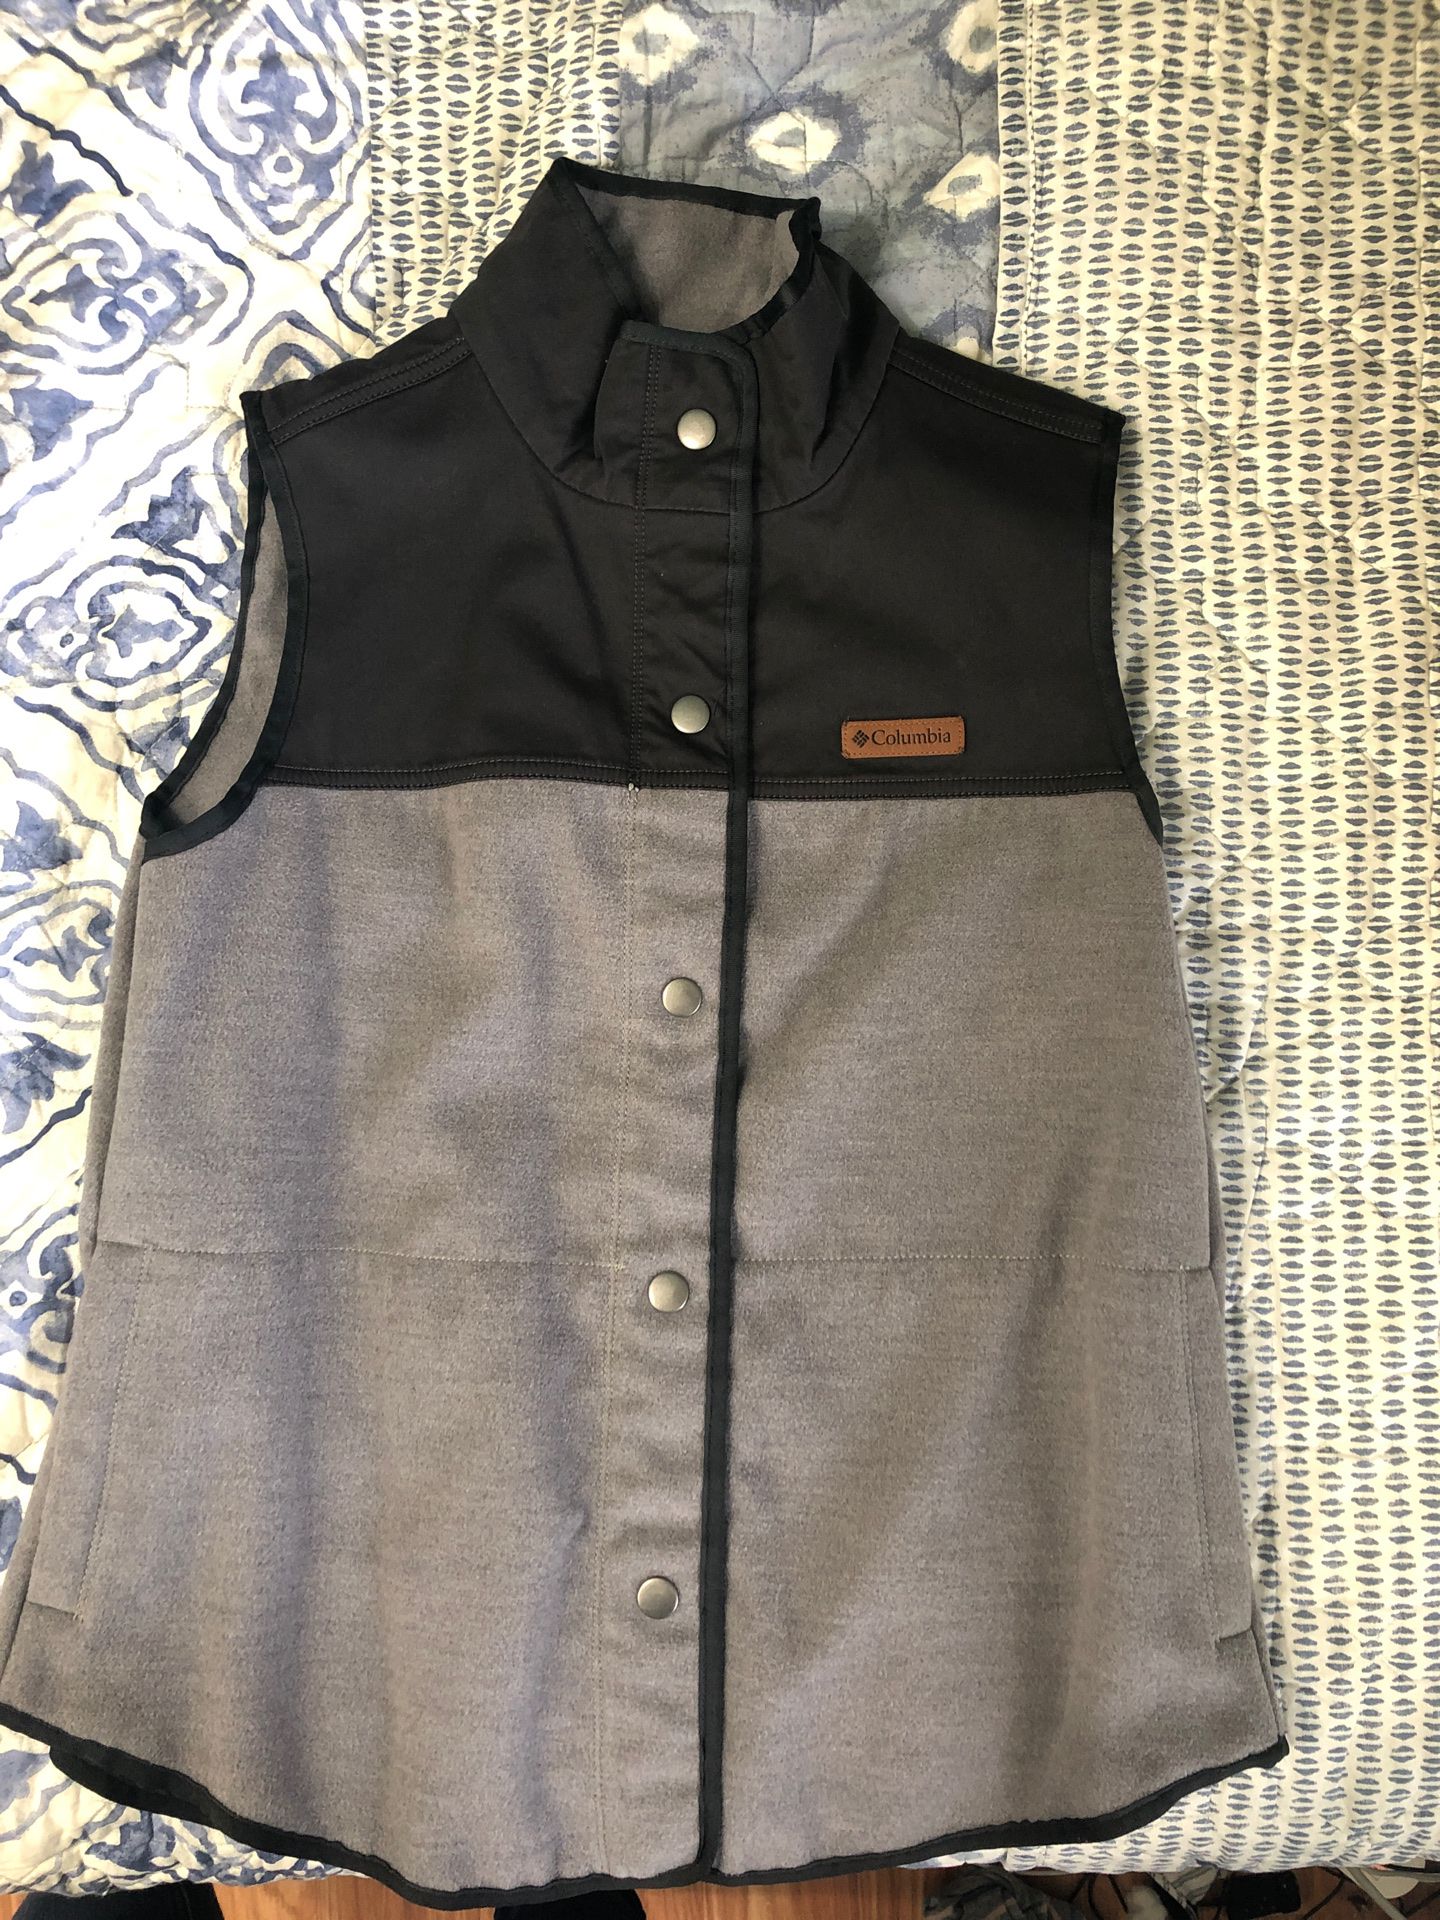 Columbia, black and gray vest (L)